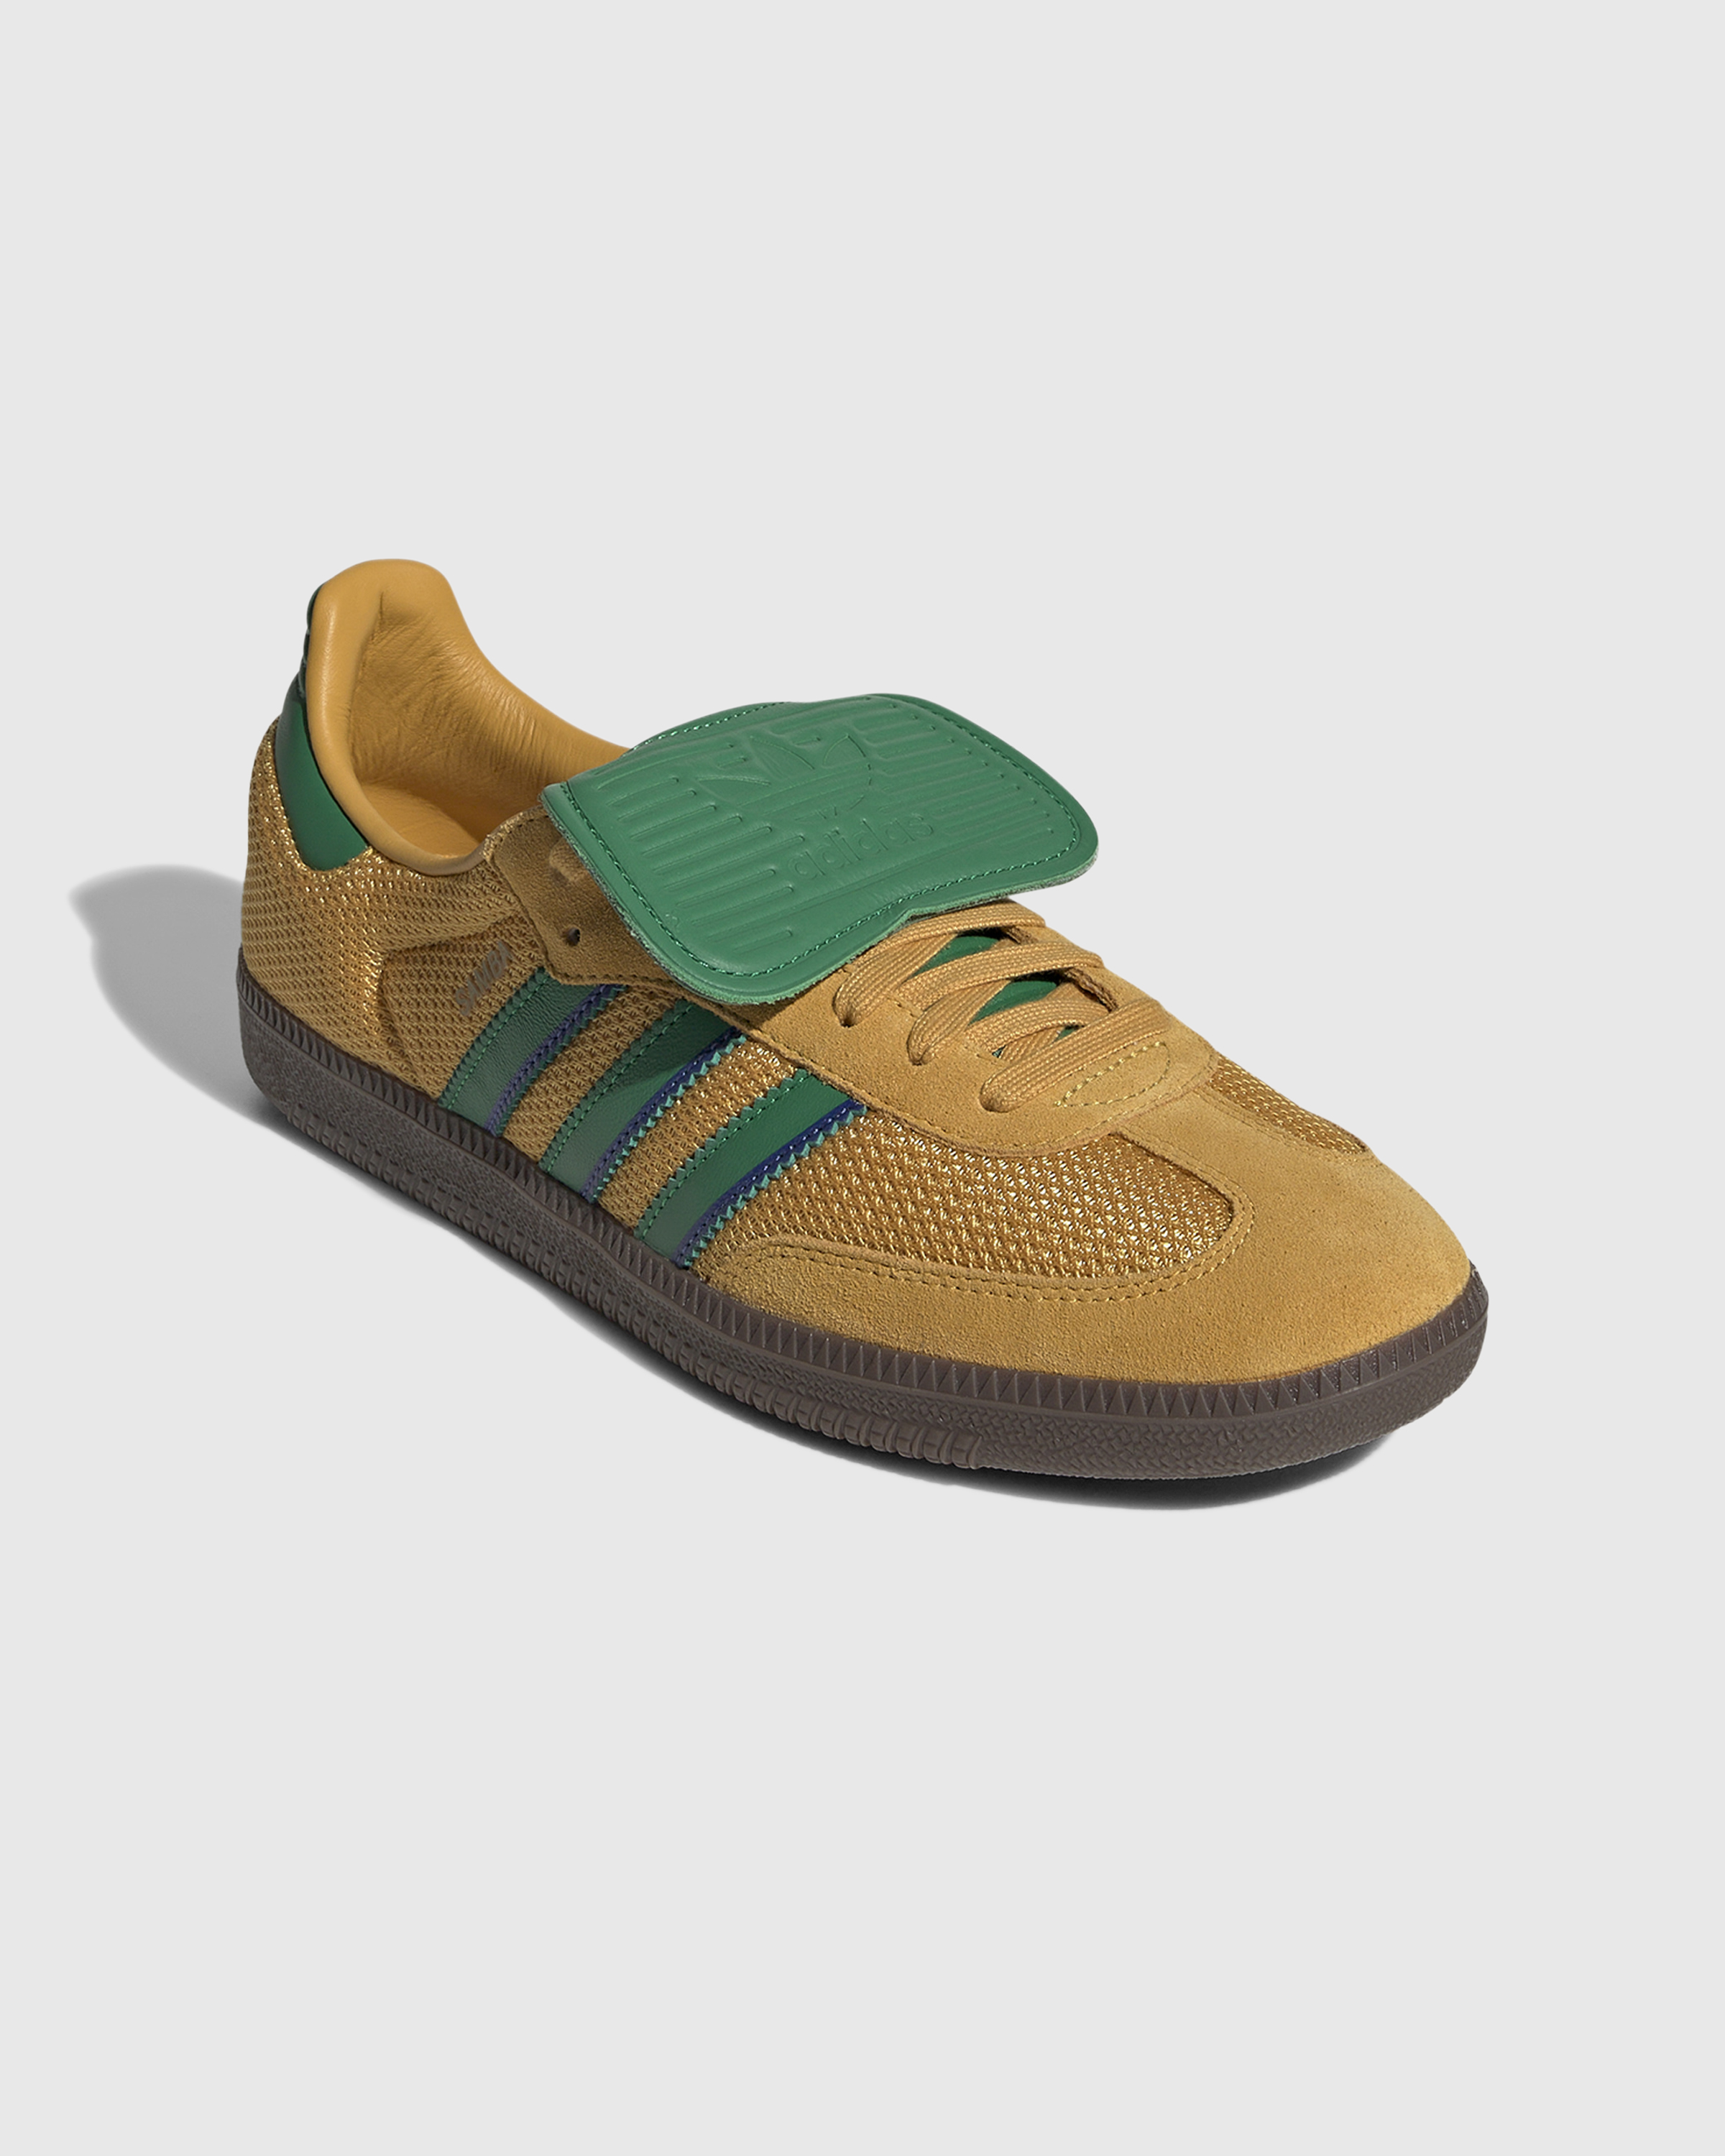 Adidas – Samba LT Preyel/Green/Gum - Low Top Sneakers - Orange - Image 3